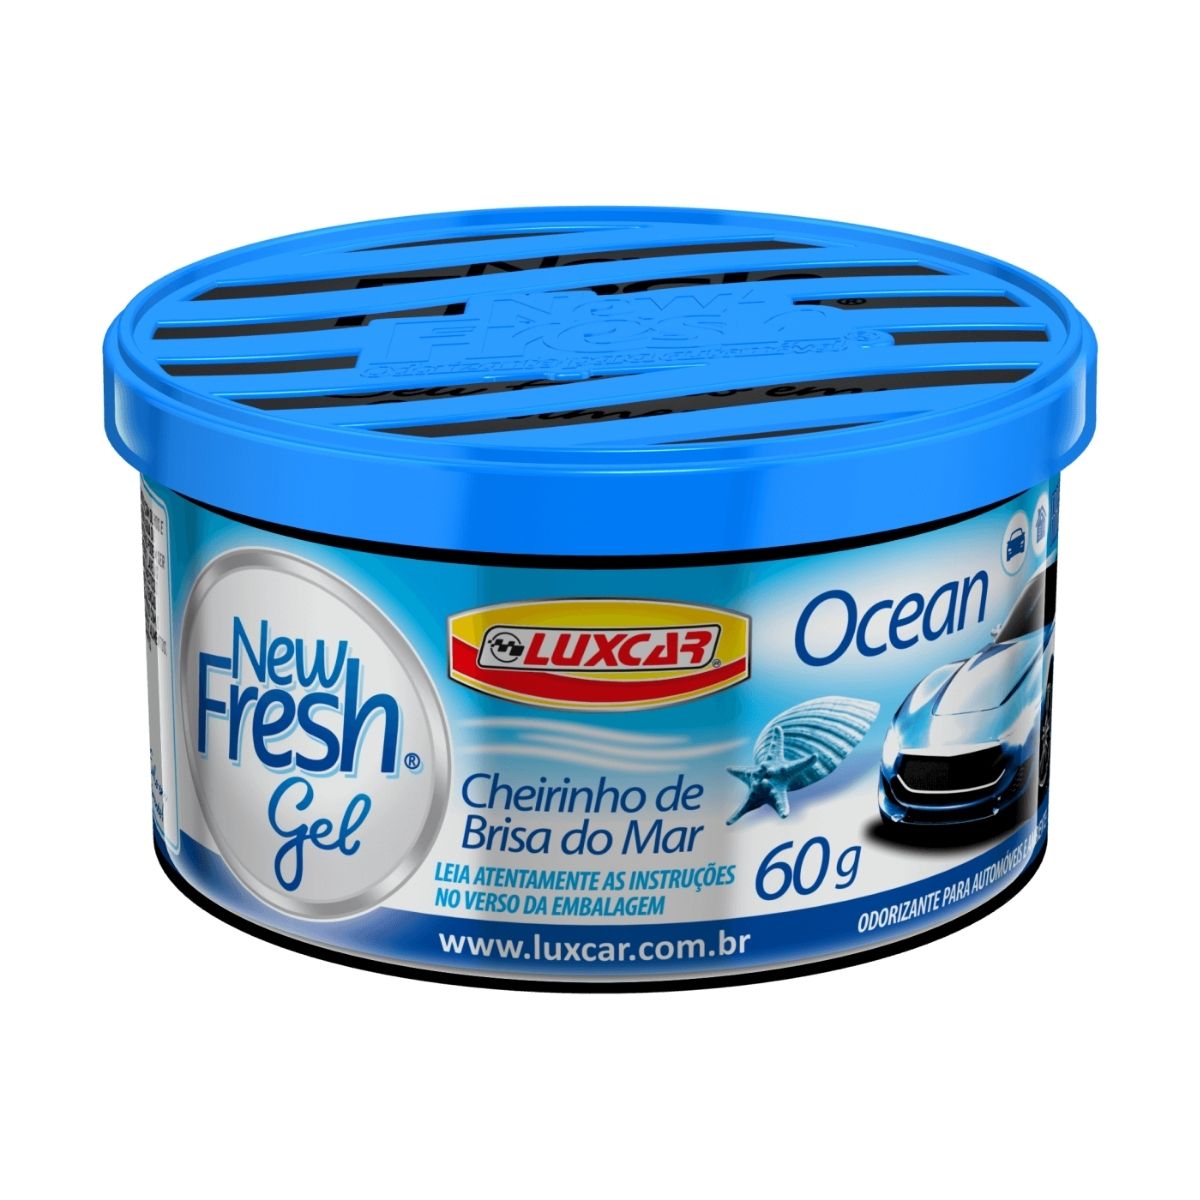 Aromatizante New Fresh Gel Ocean 60g